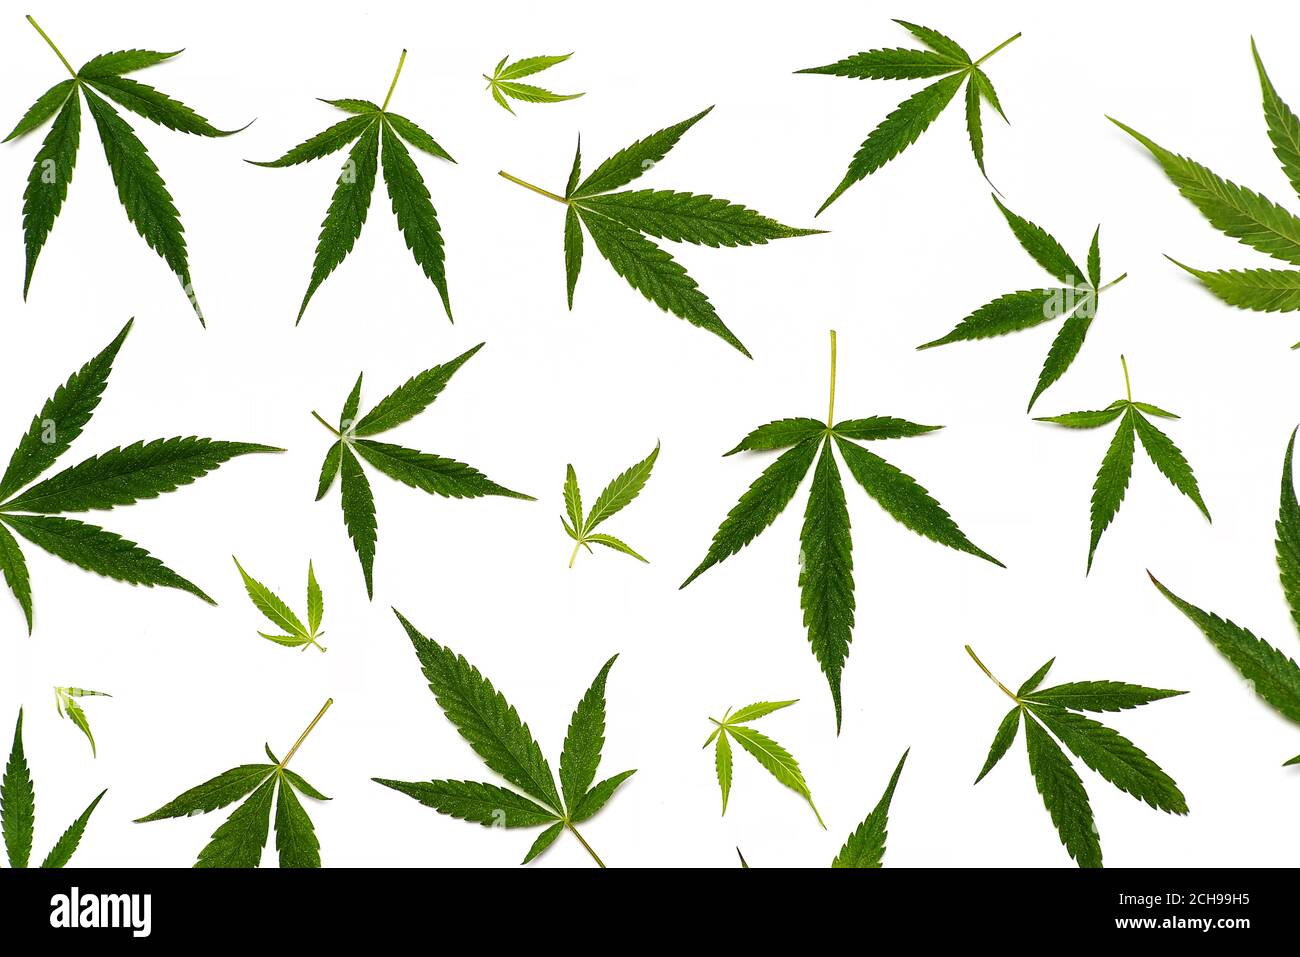 Pattern of marijuana cannabis leaves on white background flat lay Stock Photo